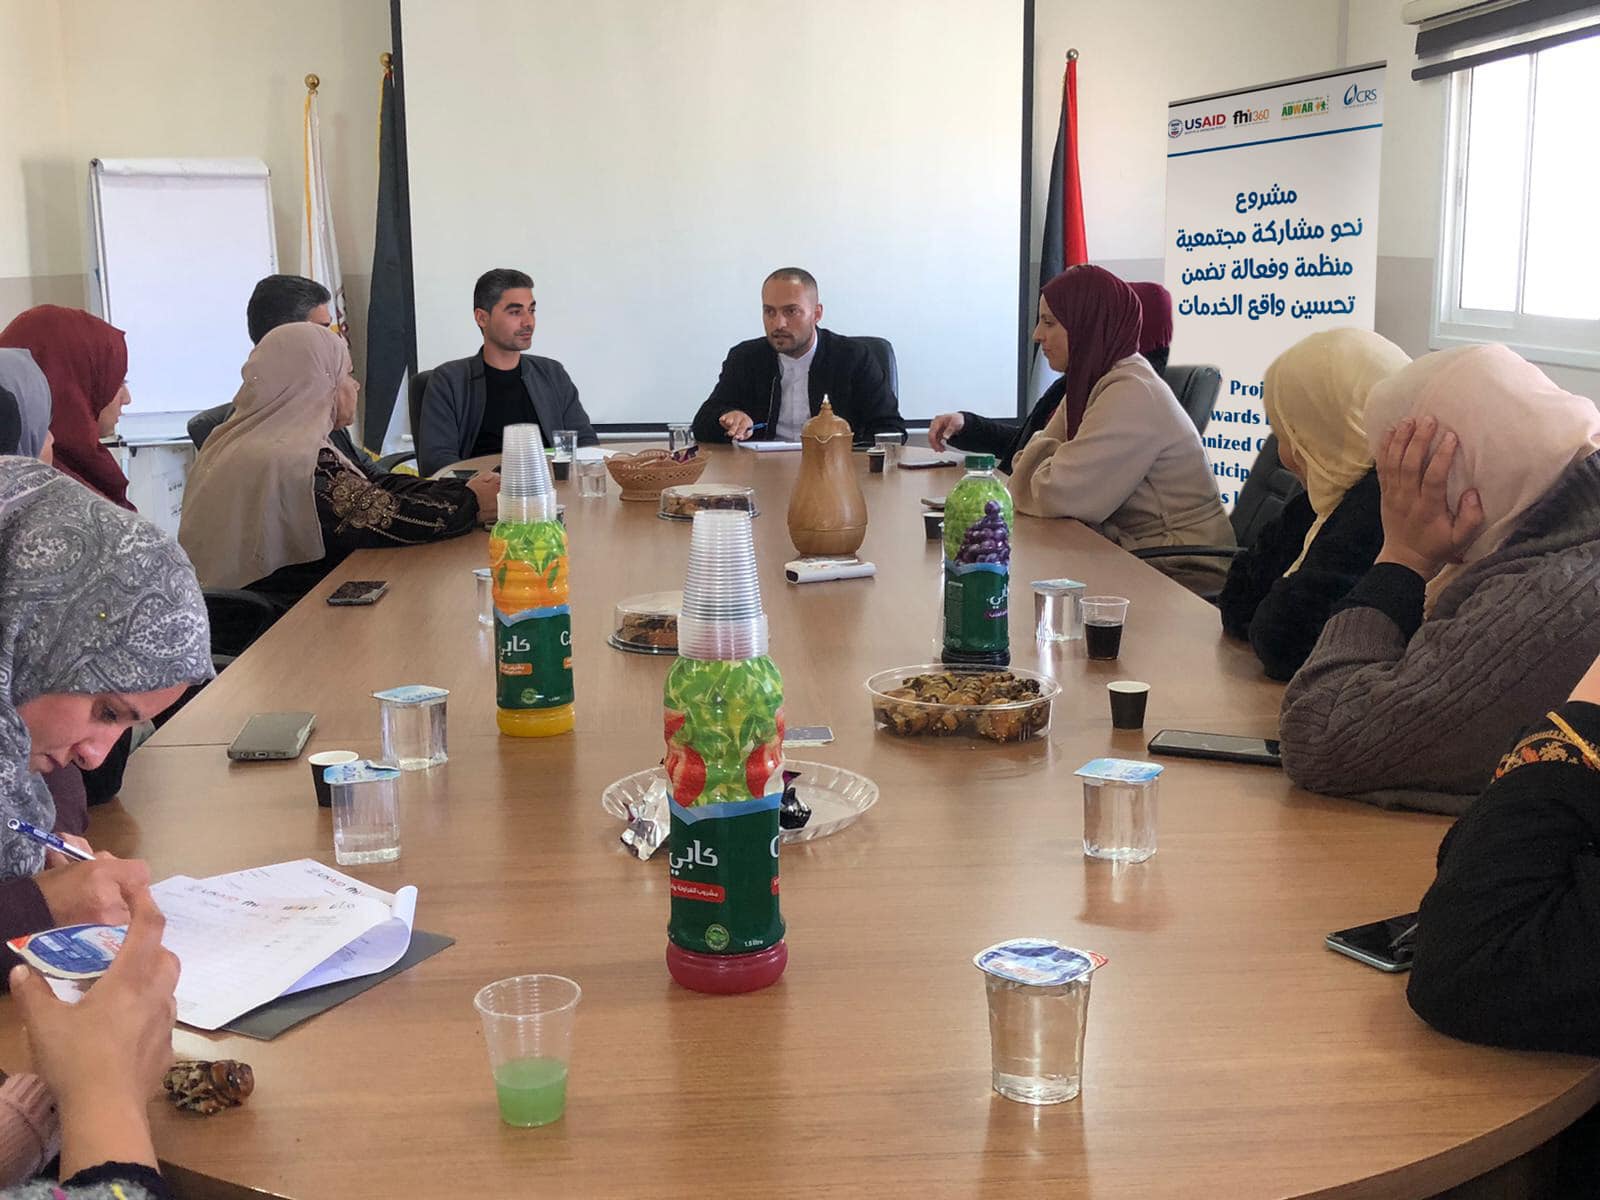  Accountability Meeting in Khallet Almaieh Community